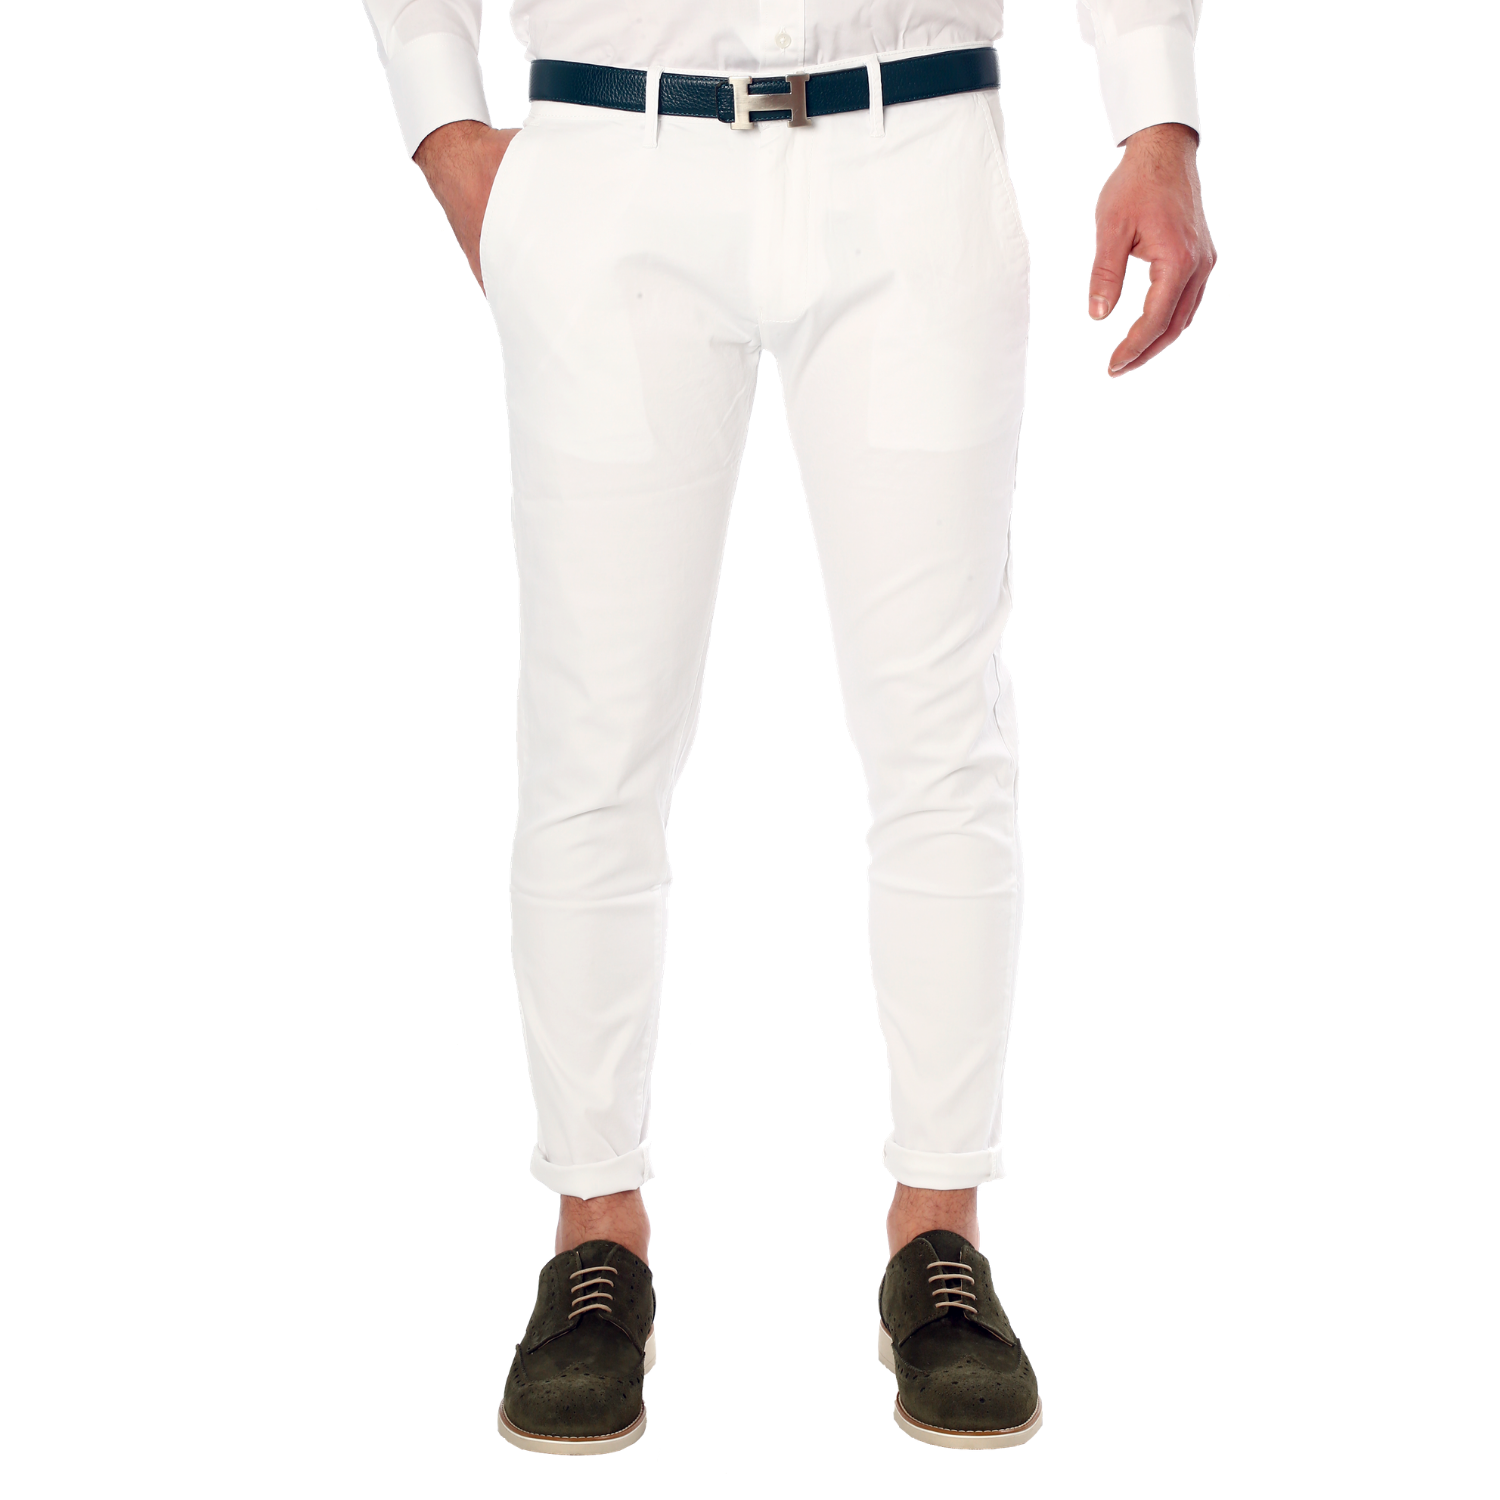 Pantaloni Uomo Cotone Chino Jeans Slim Fit Casual Tasca America